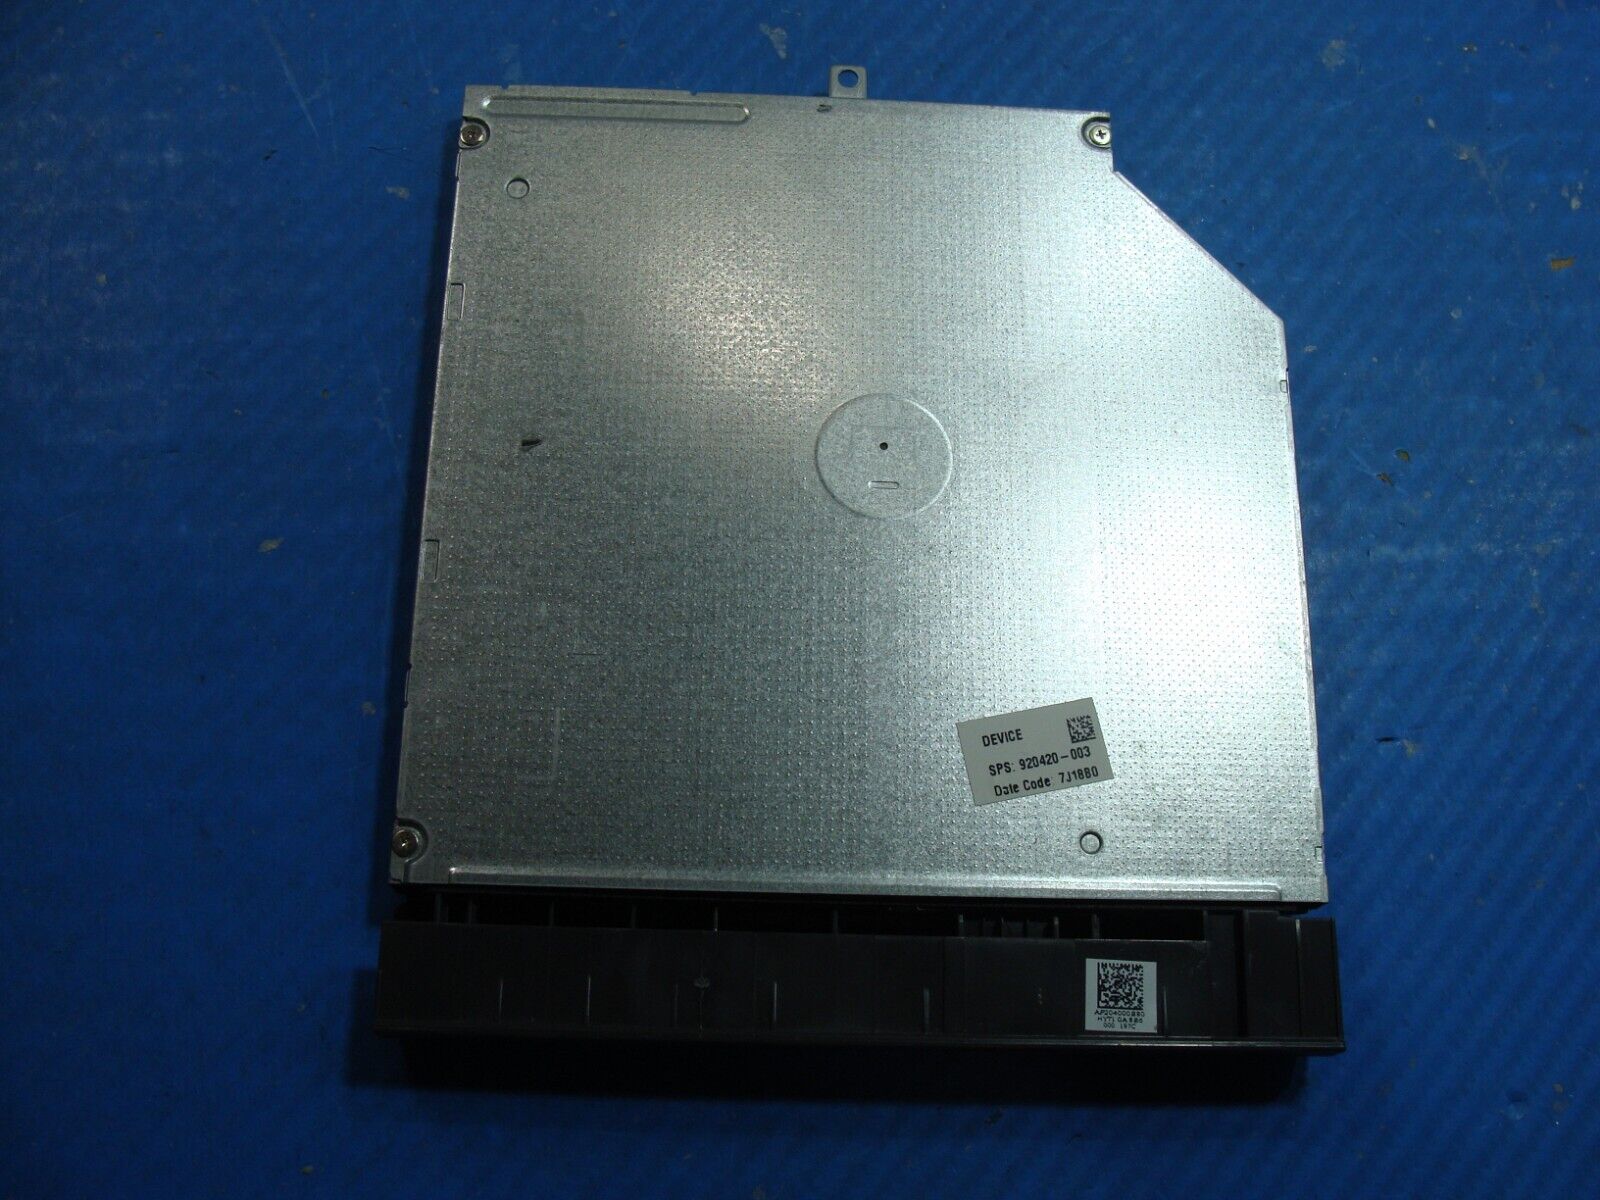 HP 250 G6 15.6